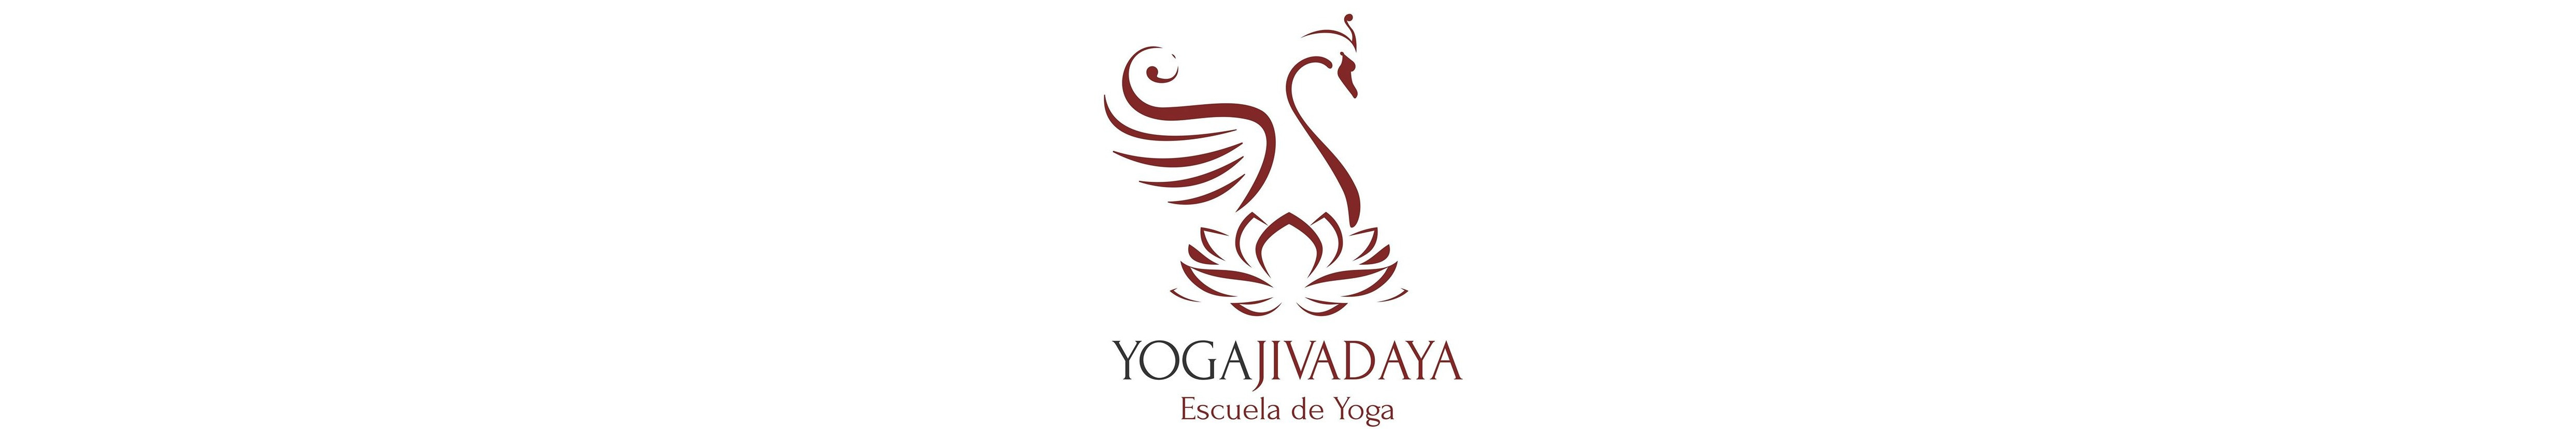 Escuela de Yoga Jiva Daya